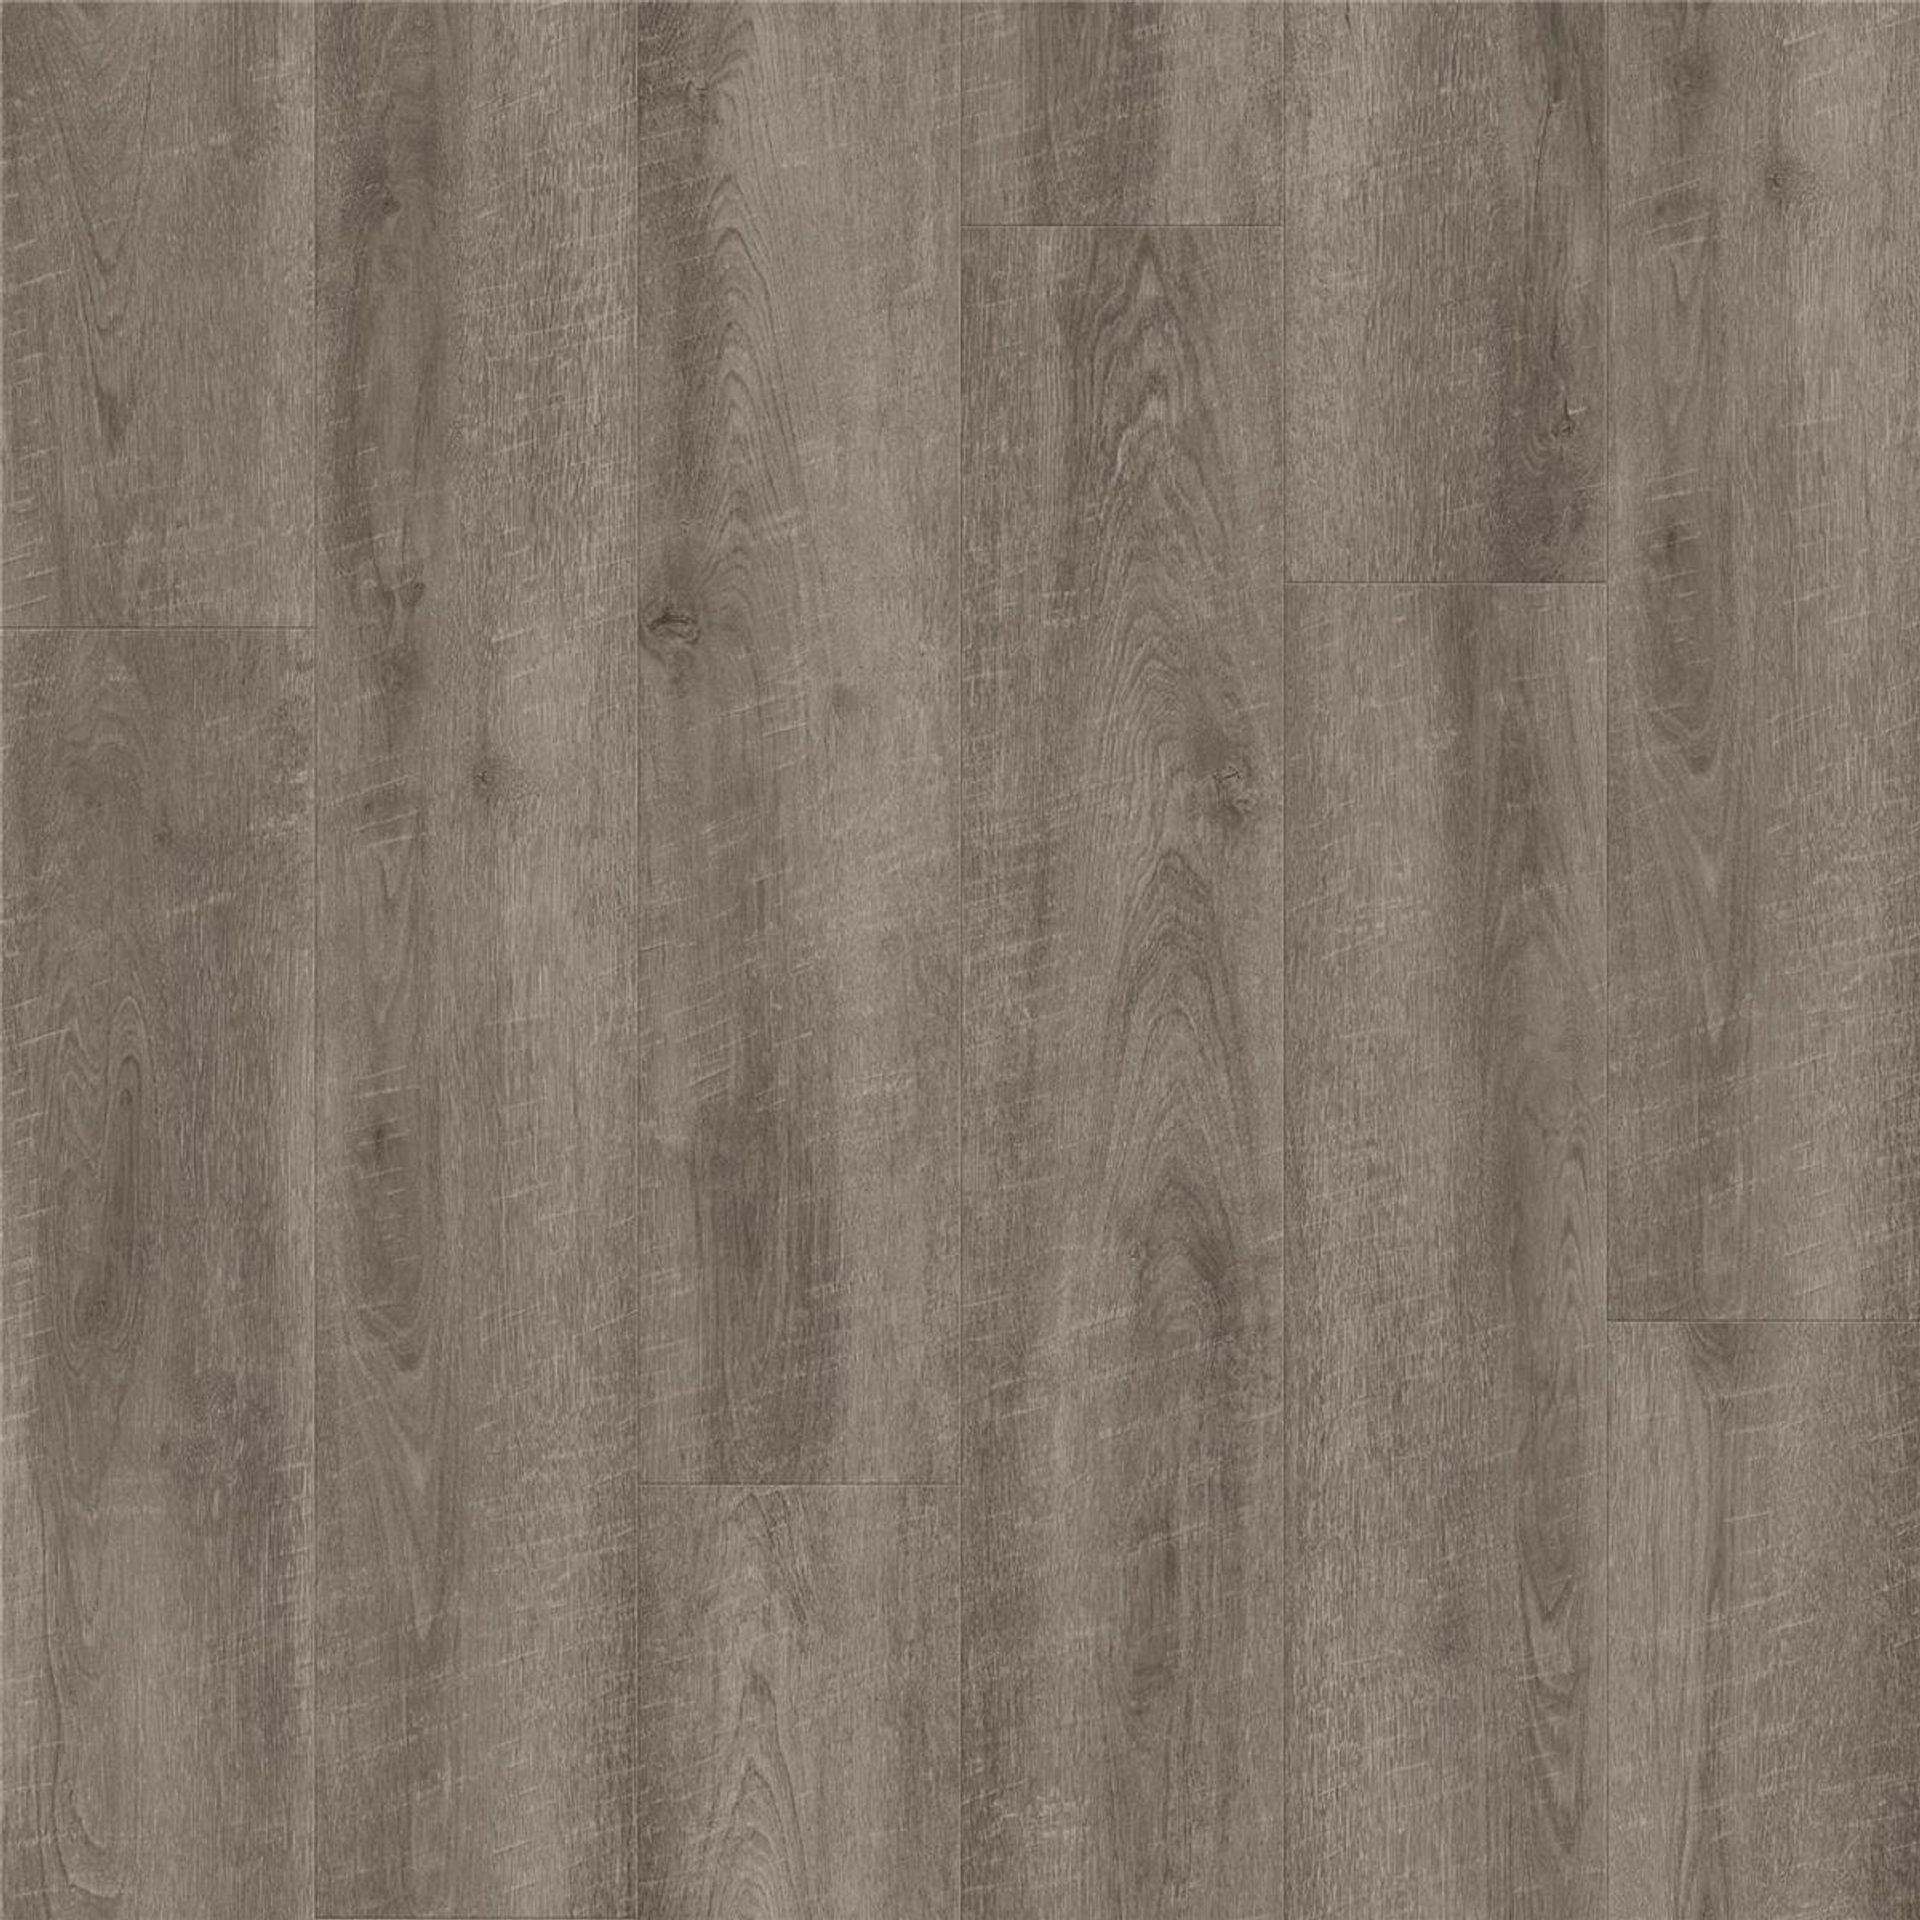 Designboden CLASSICS-Antik Oak-Dark grey Planke 120 cm x 20 cm - Nutzschichtdicke 0,55 mm